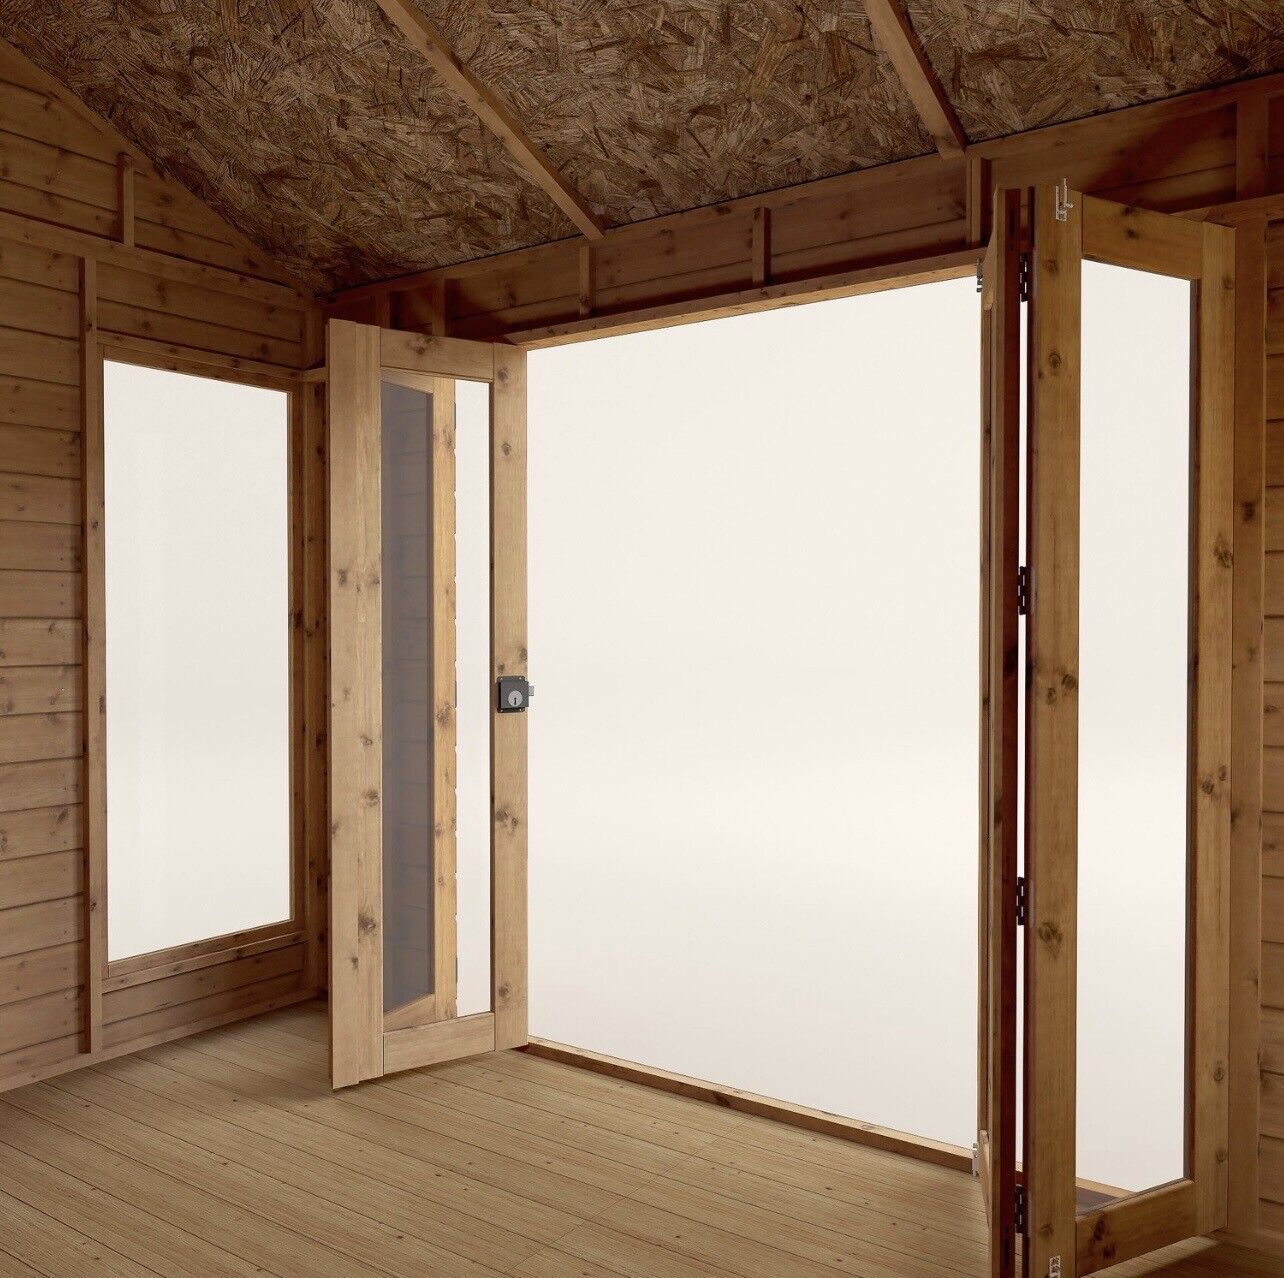 Summerhouse with Bi-Fold Doors Shatterproof and Lockable